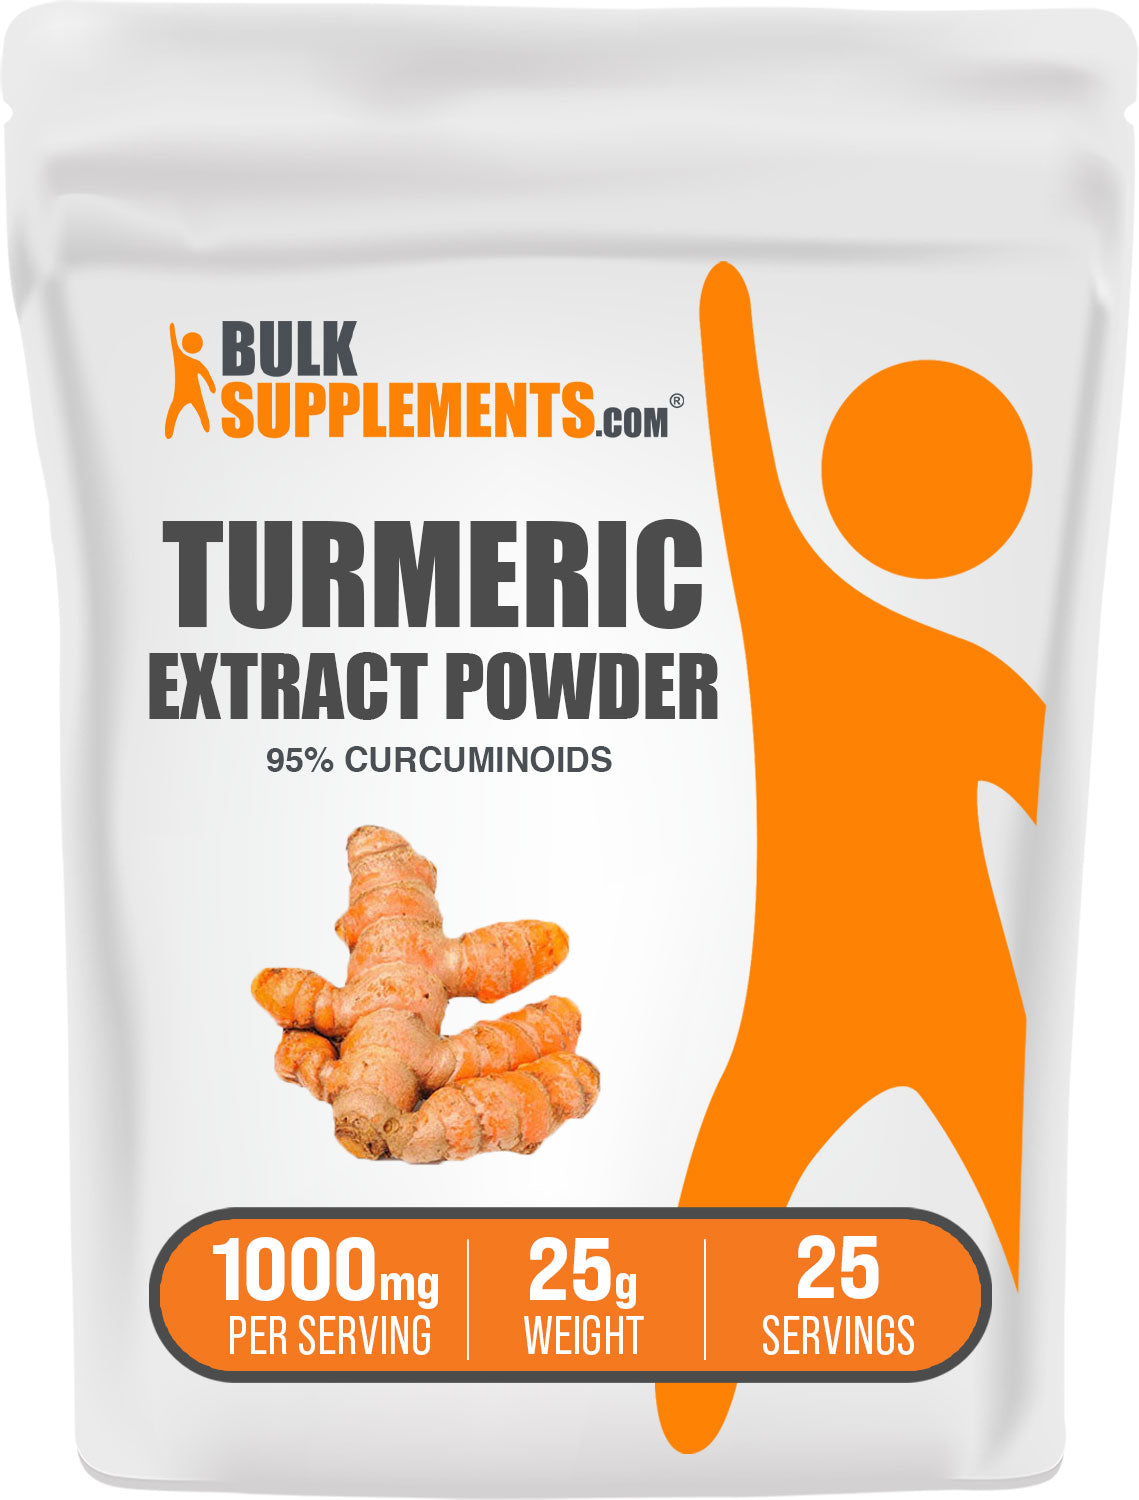 BulkSupplements Turmeric Extract Powder 95% Curcuminoids 25g bag